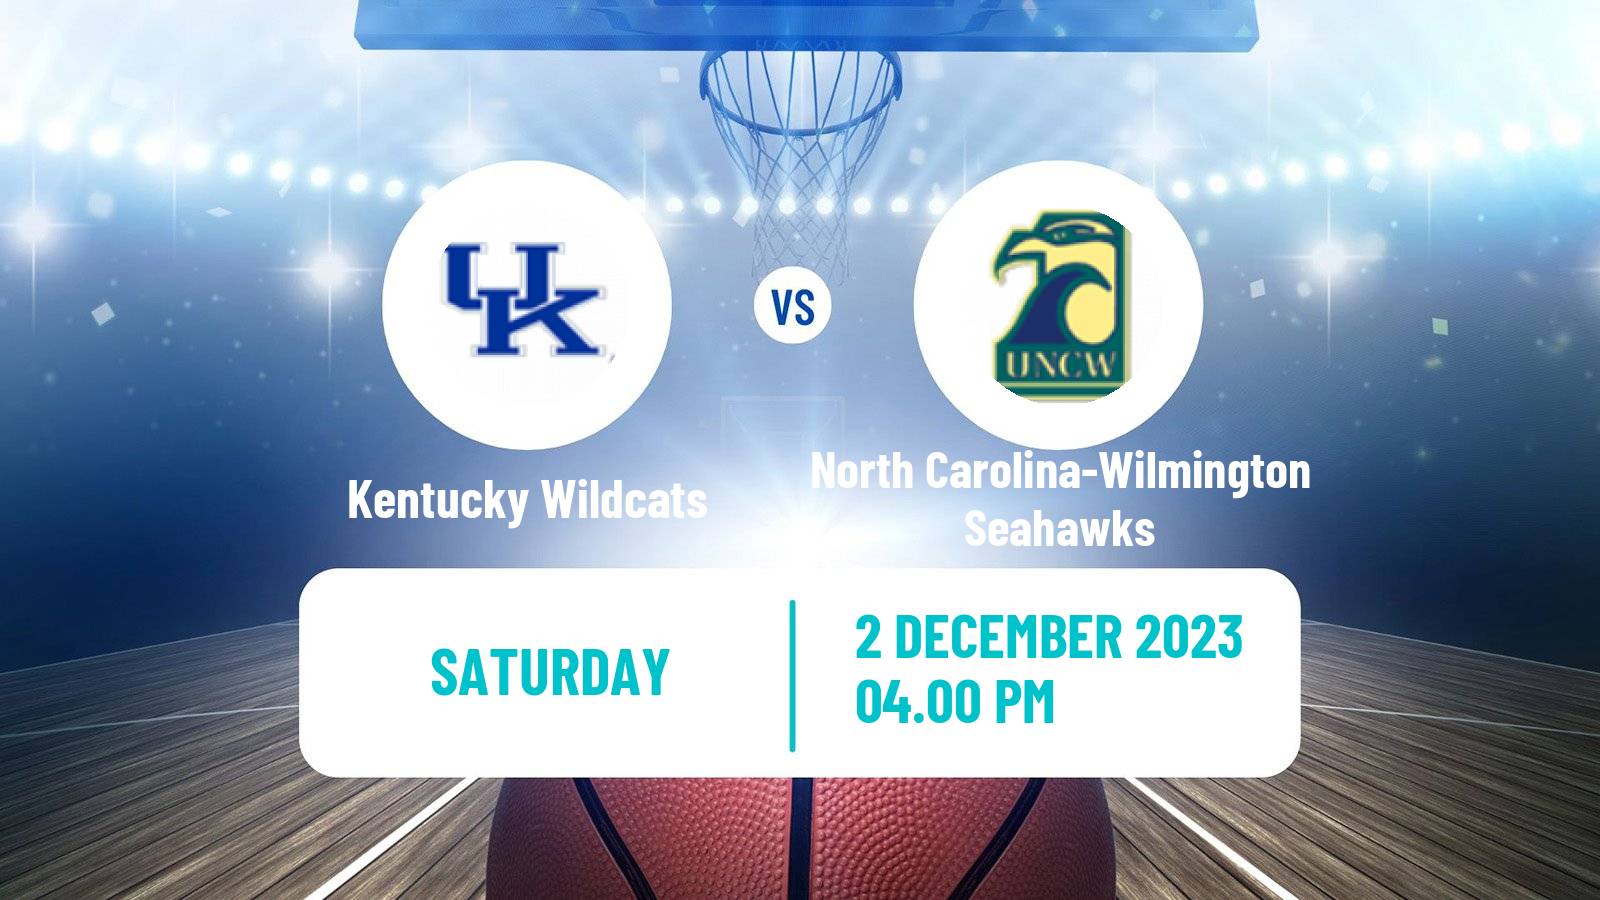 Basketball NCAA College Basketball Kentucky Wildcats - North Carolina-Wilmington Seahawks